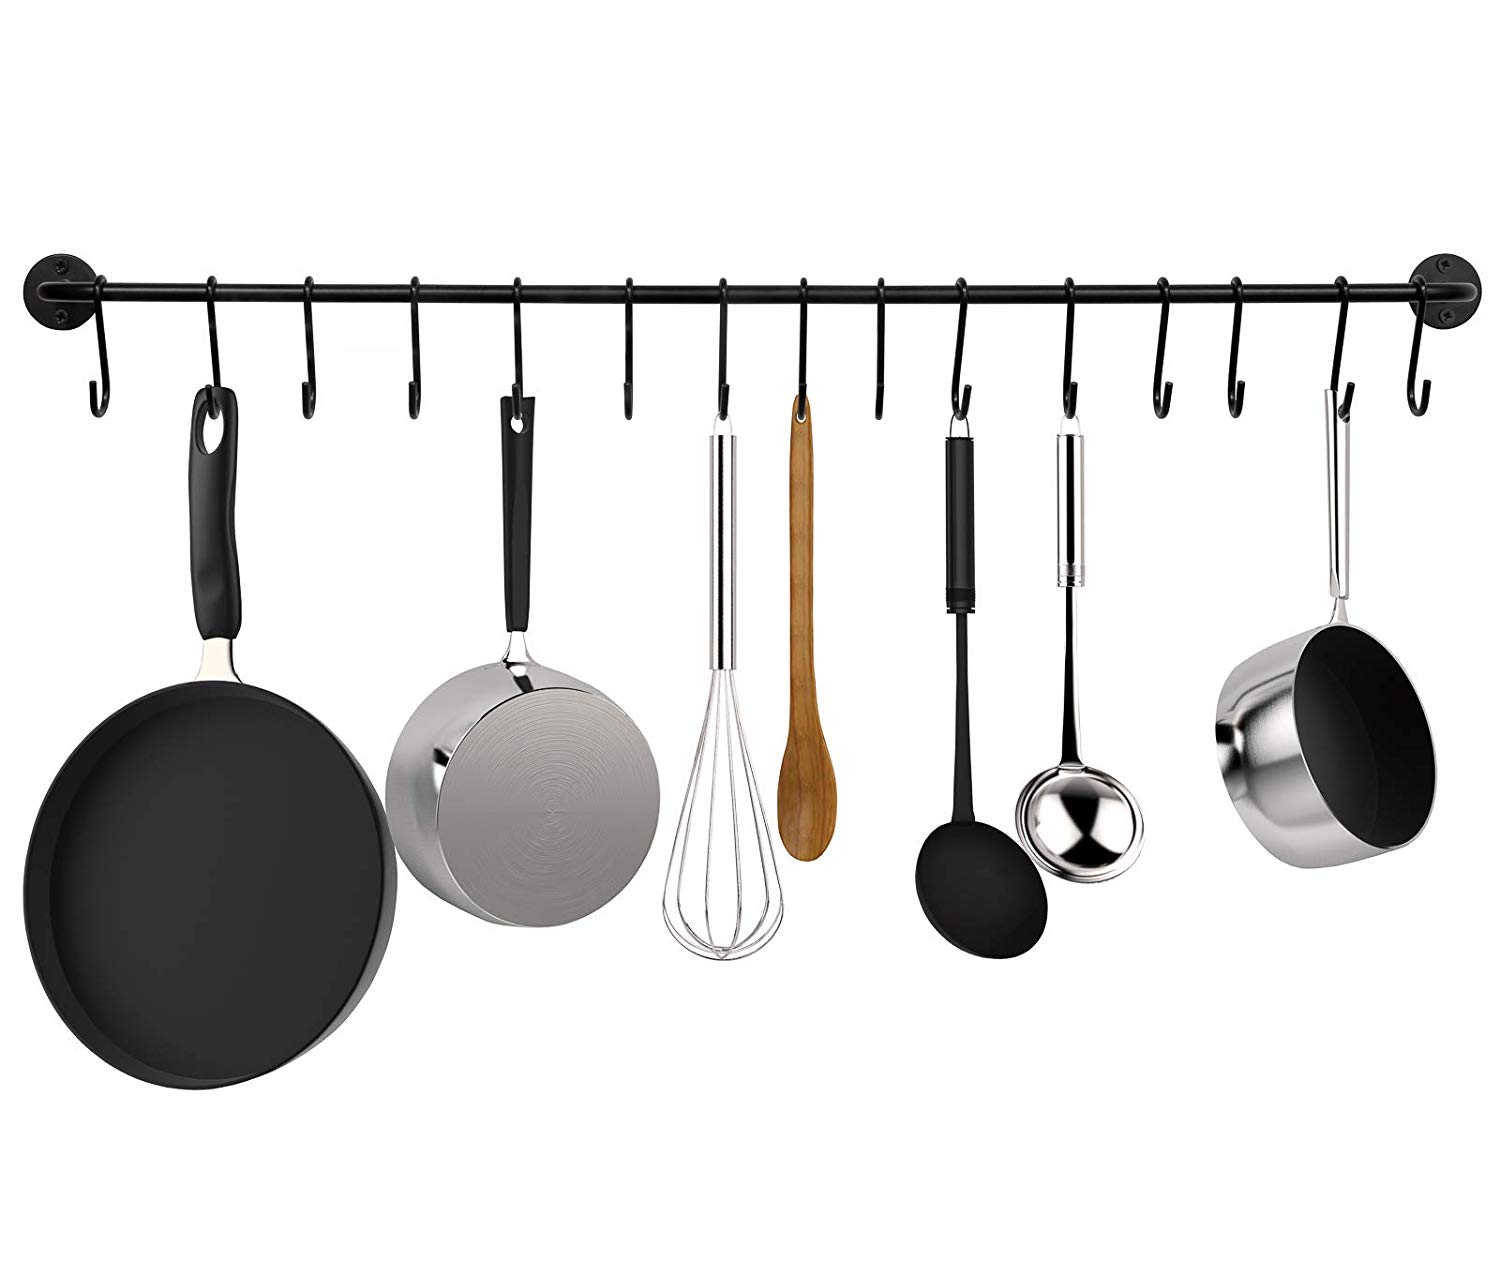 GreenCo Pot And Pan Metal Wall Mounted Kitchen Organizer Rail With 15 Hooks-Black - image 1 of 2